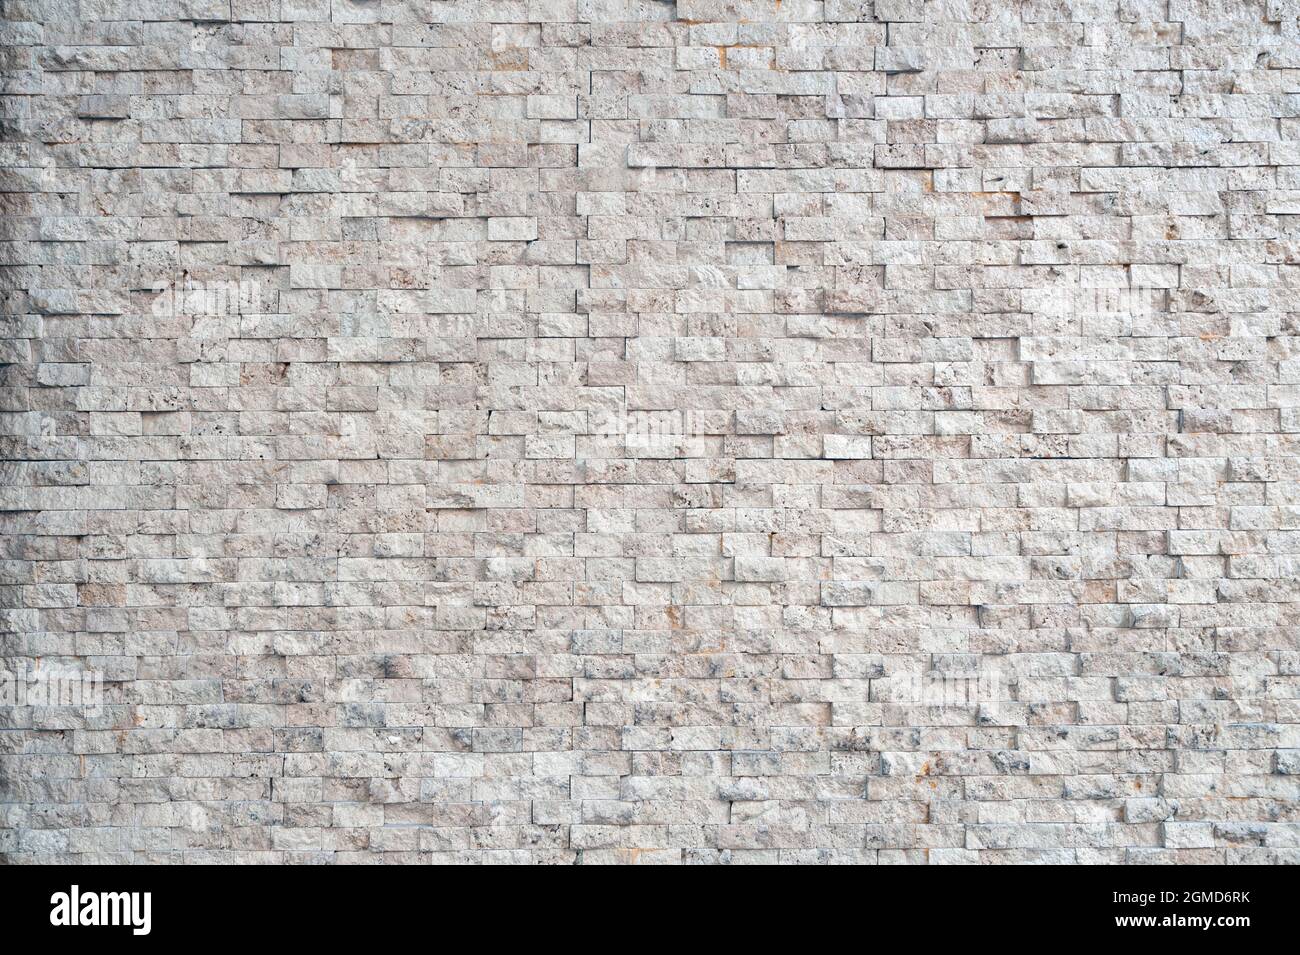 Wall, brick, stone, decoration Stock Photo